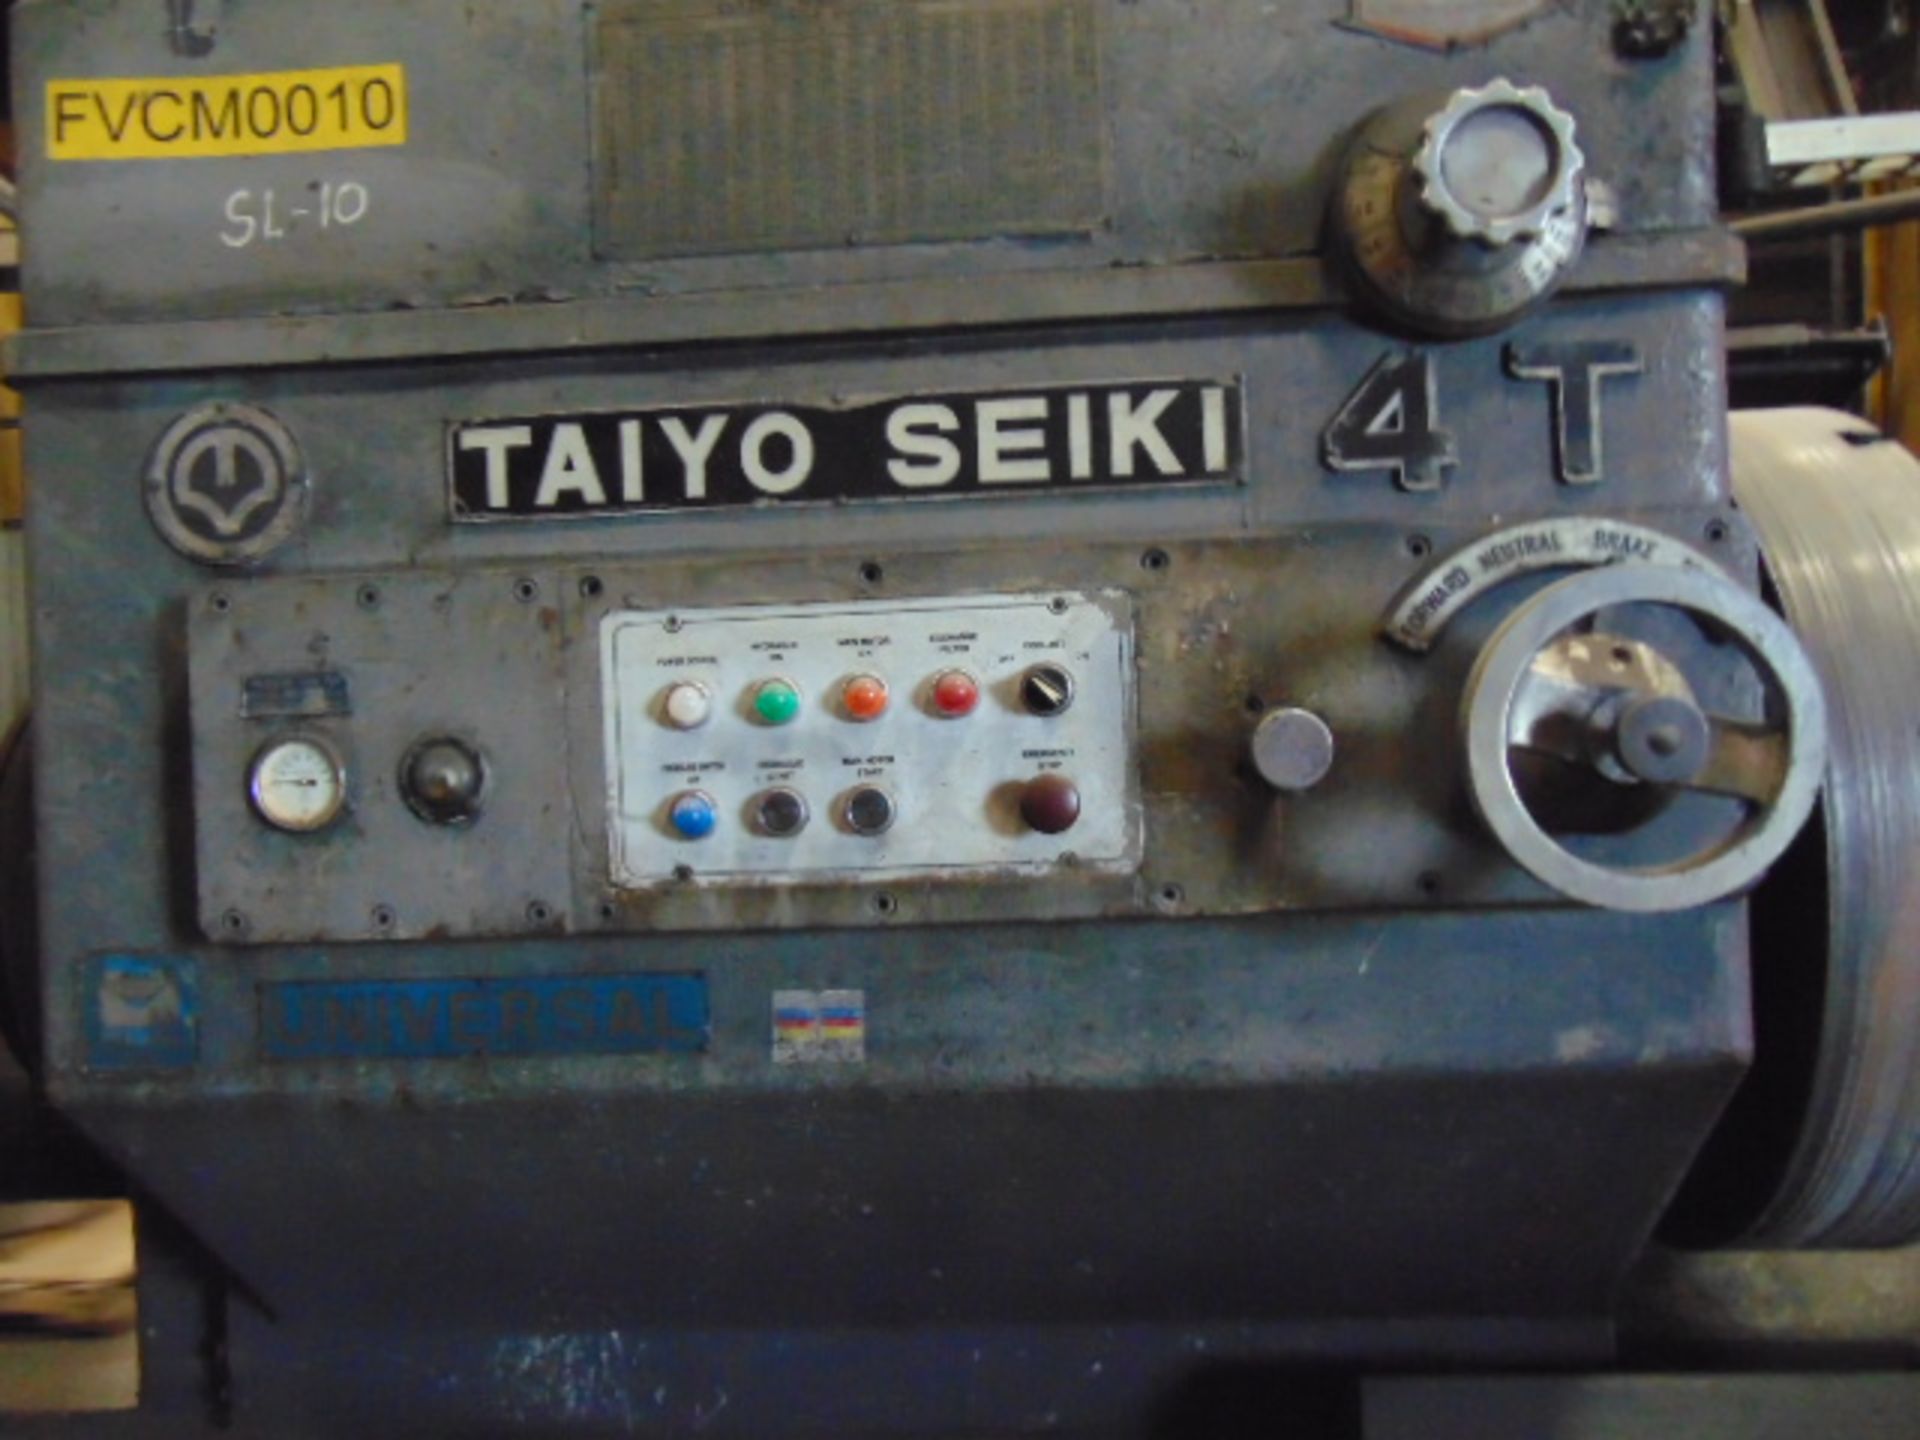 TURRET LATHE, TAIYO SEIKI 4T, 12.5" bore, 31.5" 3-jaw chuck, full length lead screw, cross sliding - Image 2 of 14